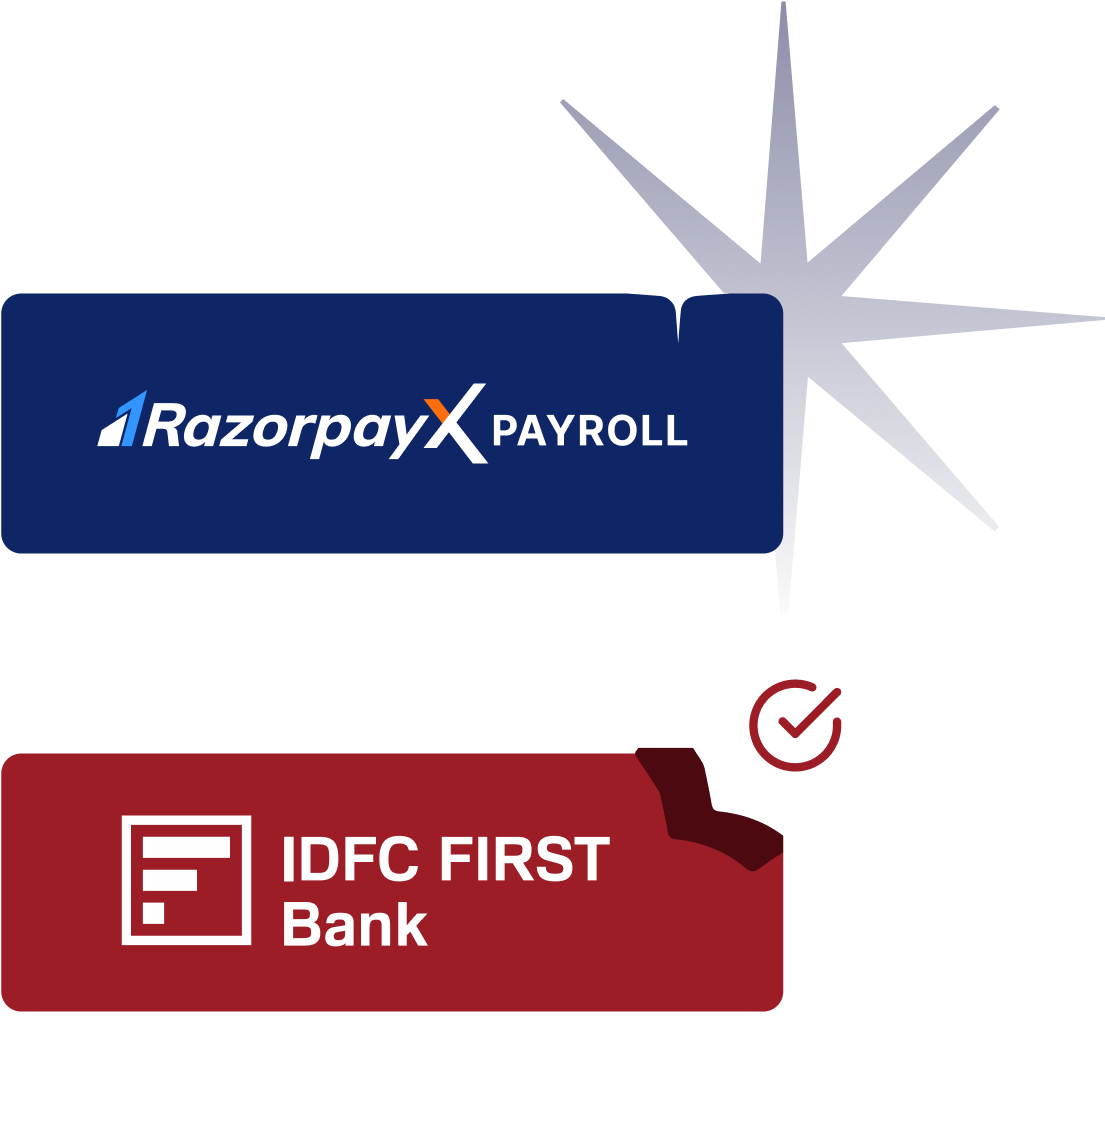 Payroll Software for IDFC Bank Customers